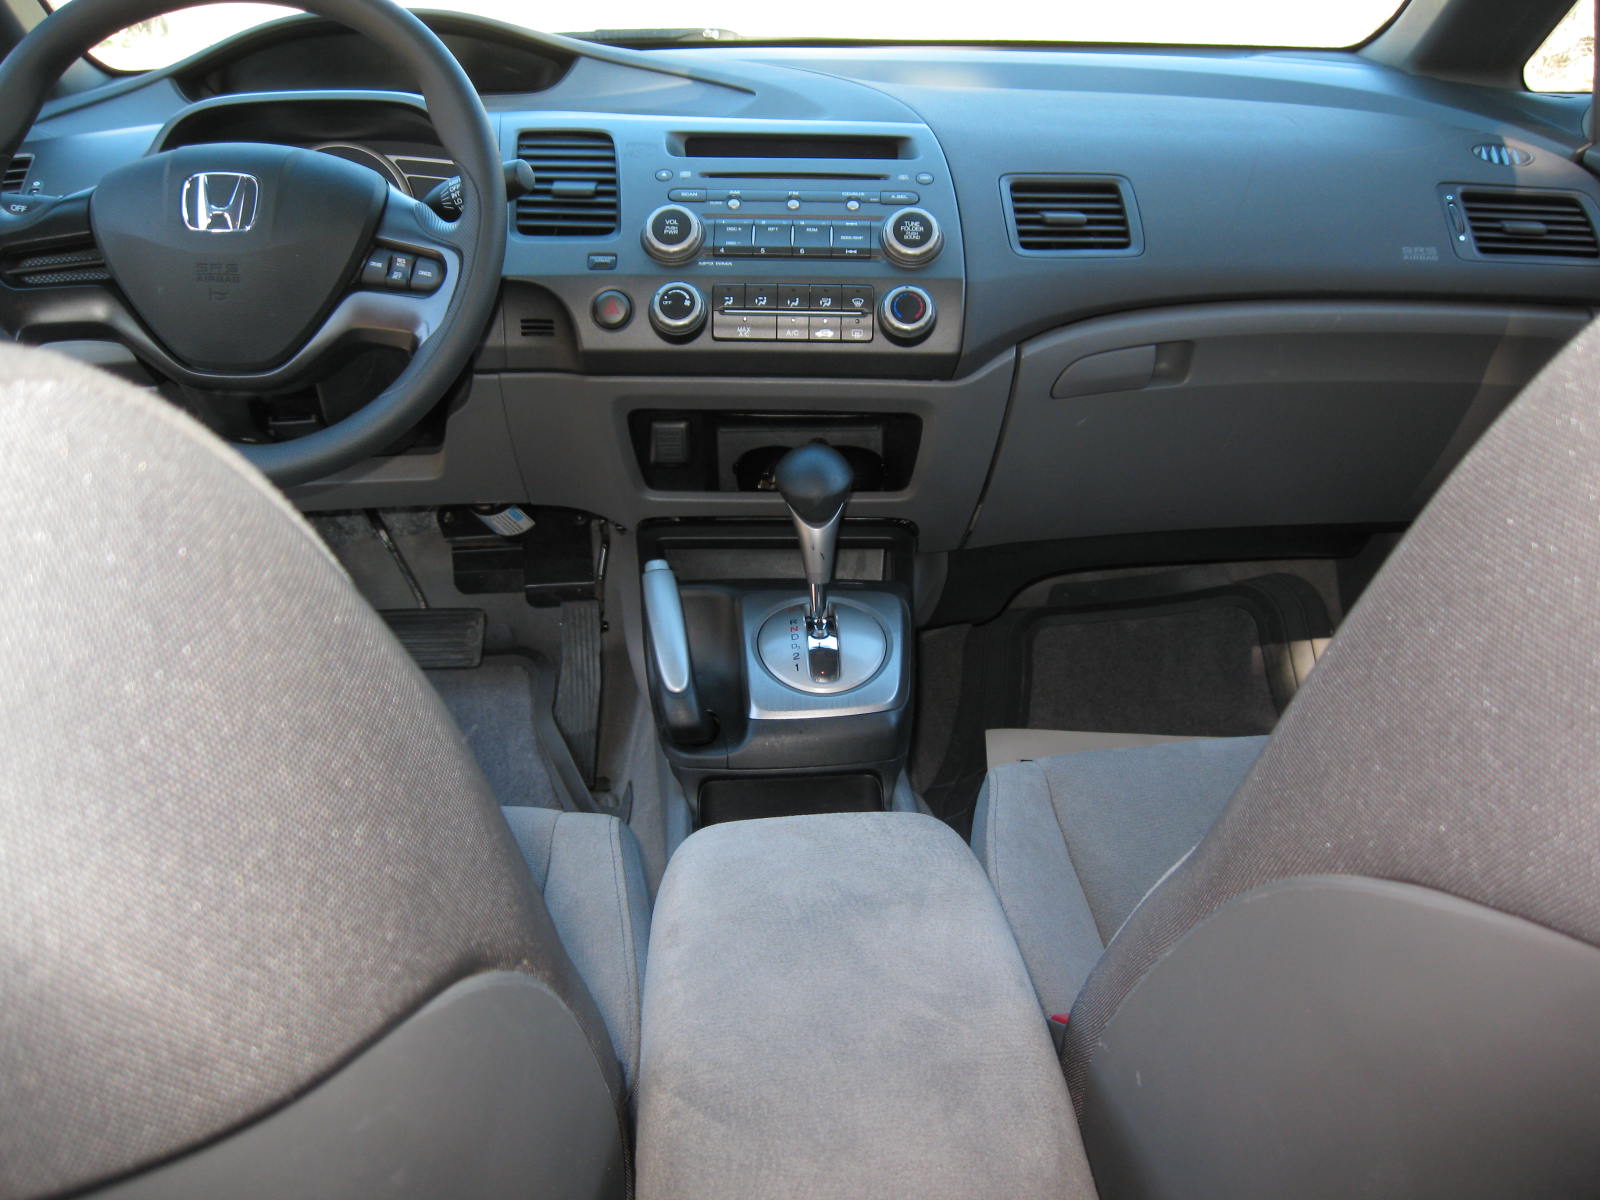 2006 Honda civic lx coupe interior